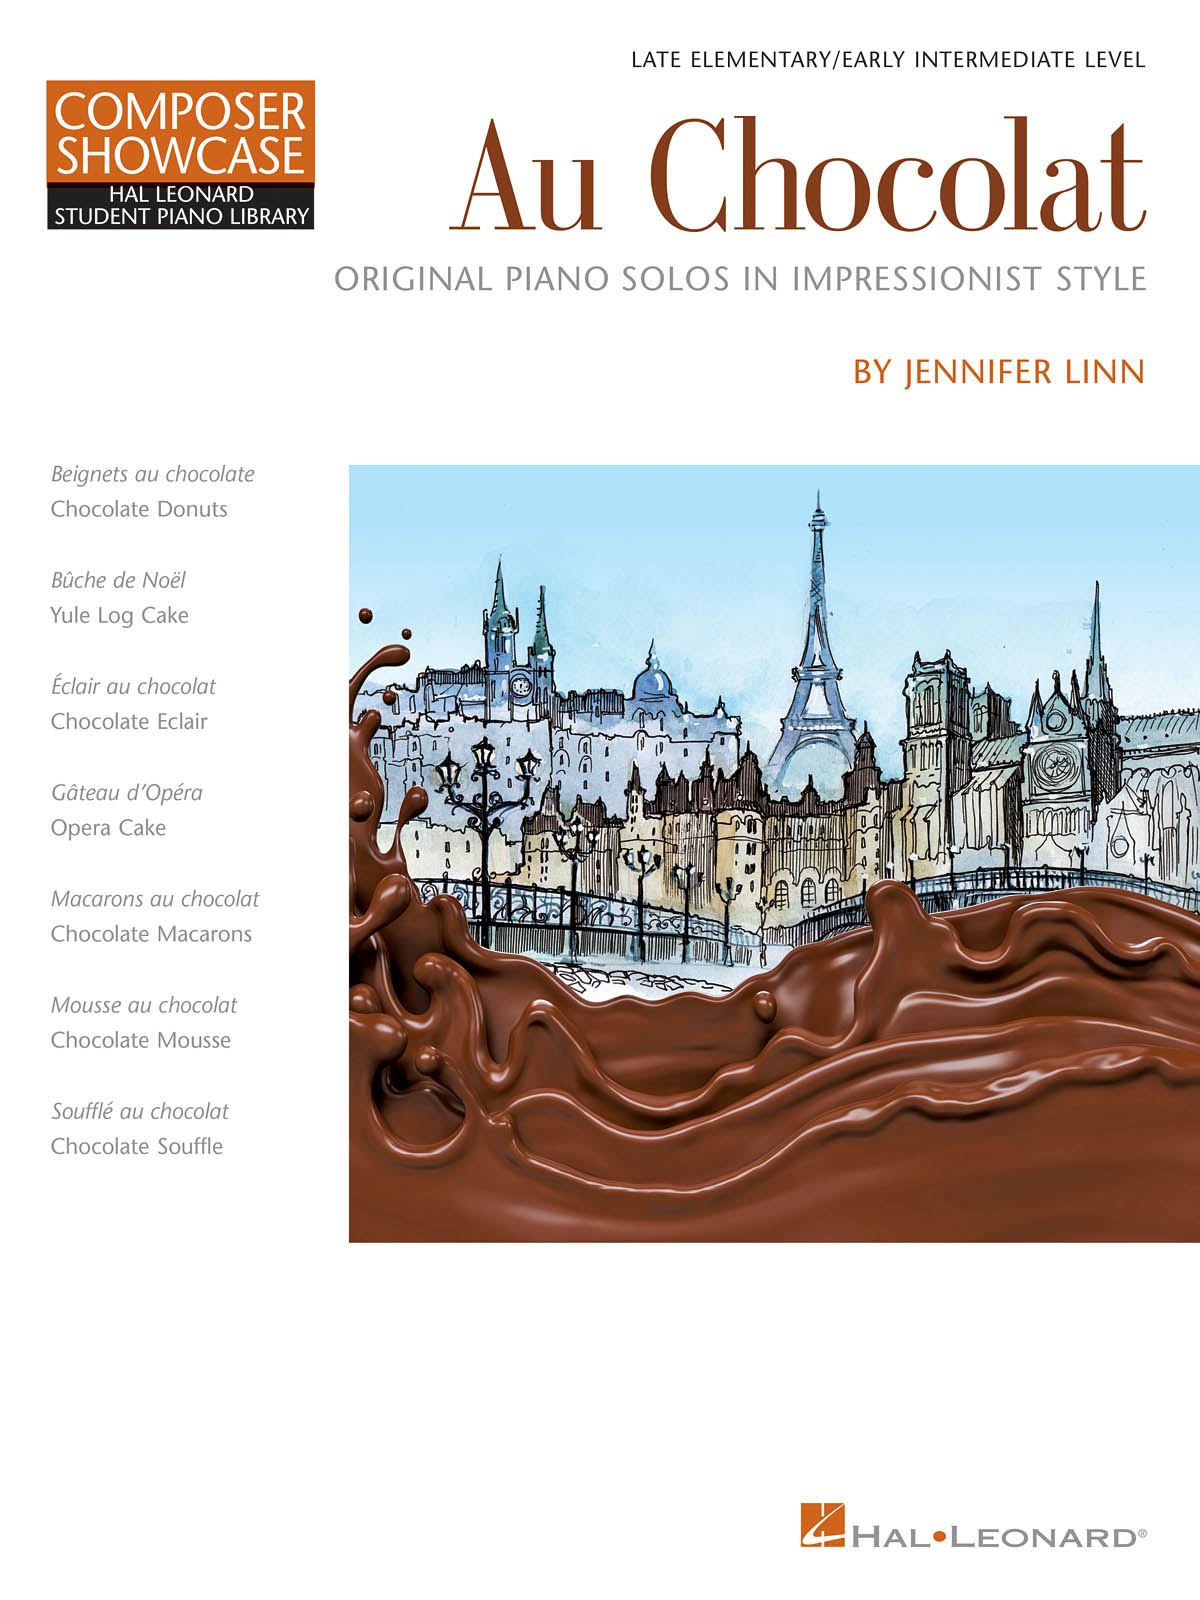 Au Chocolat - Original Piano Solos (LINN JENNIFER)